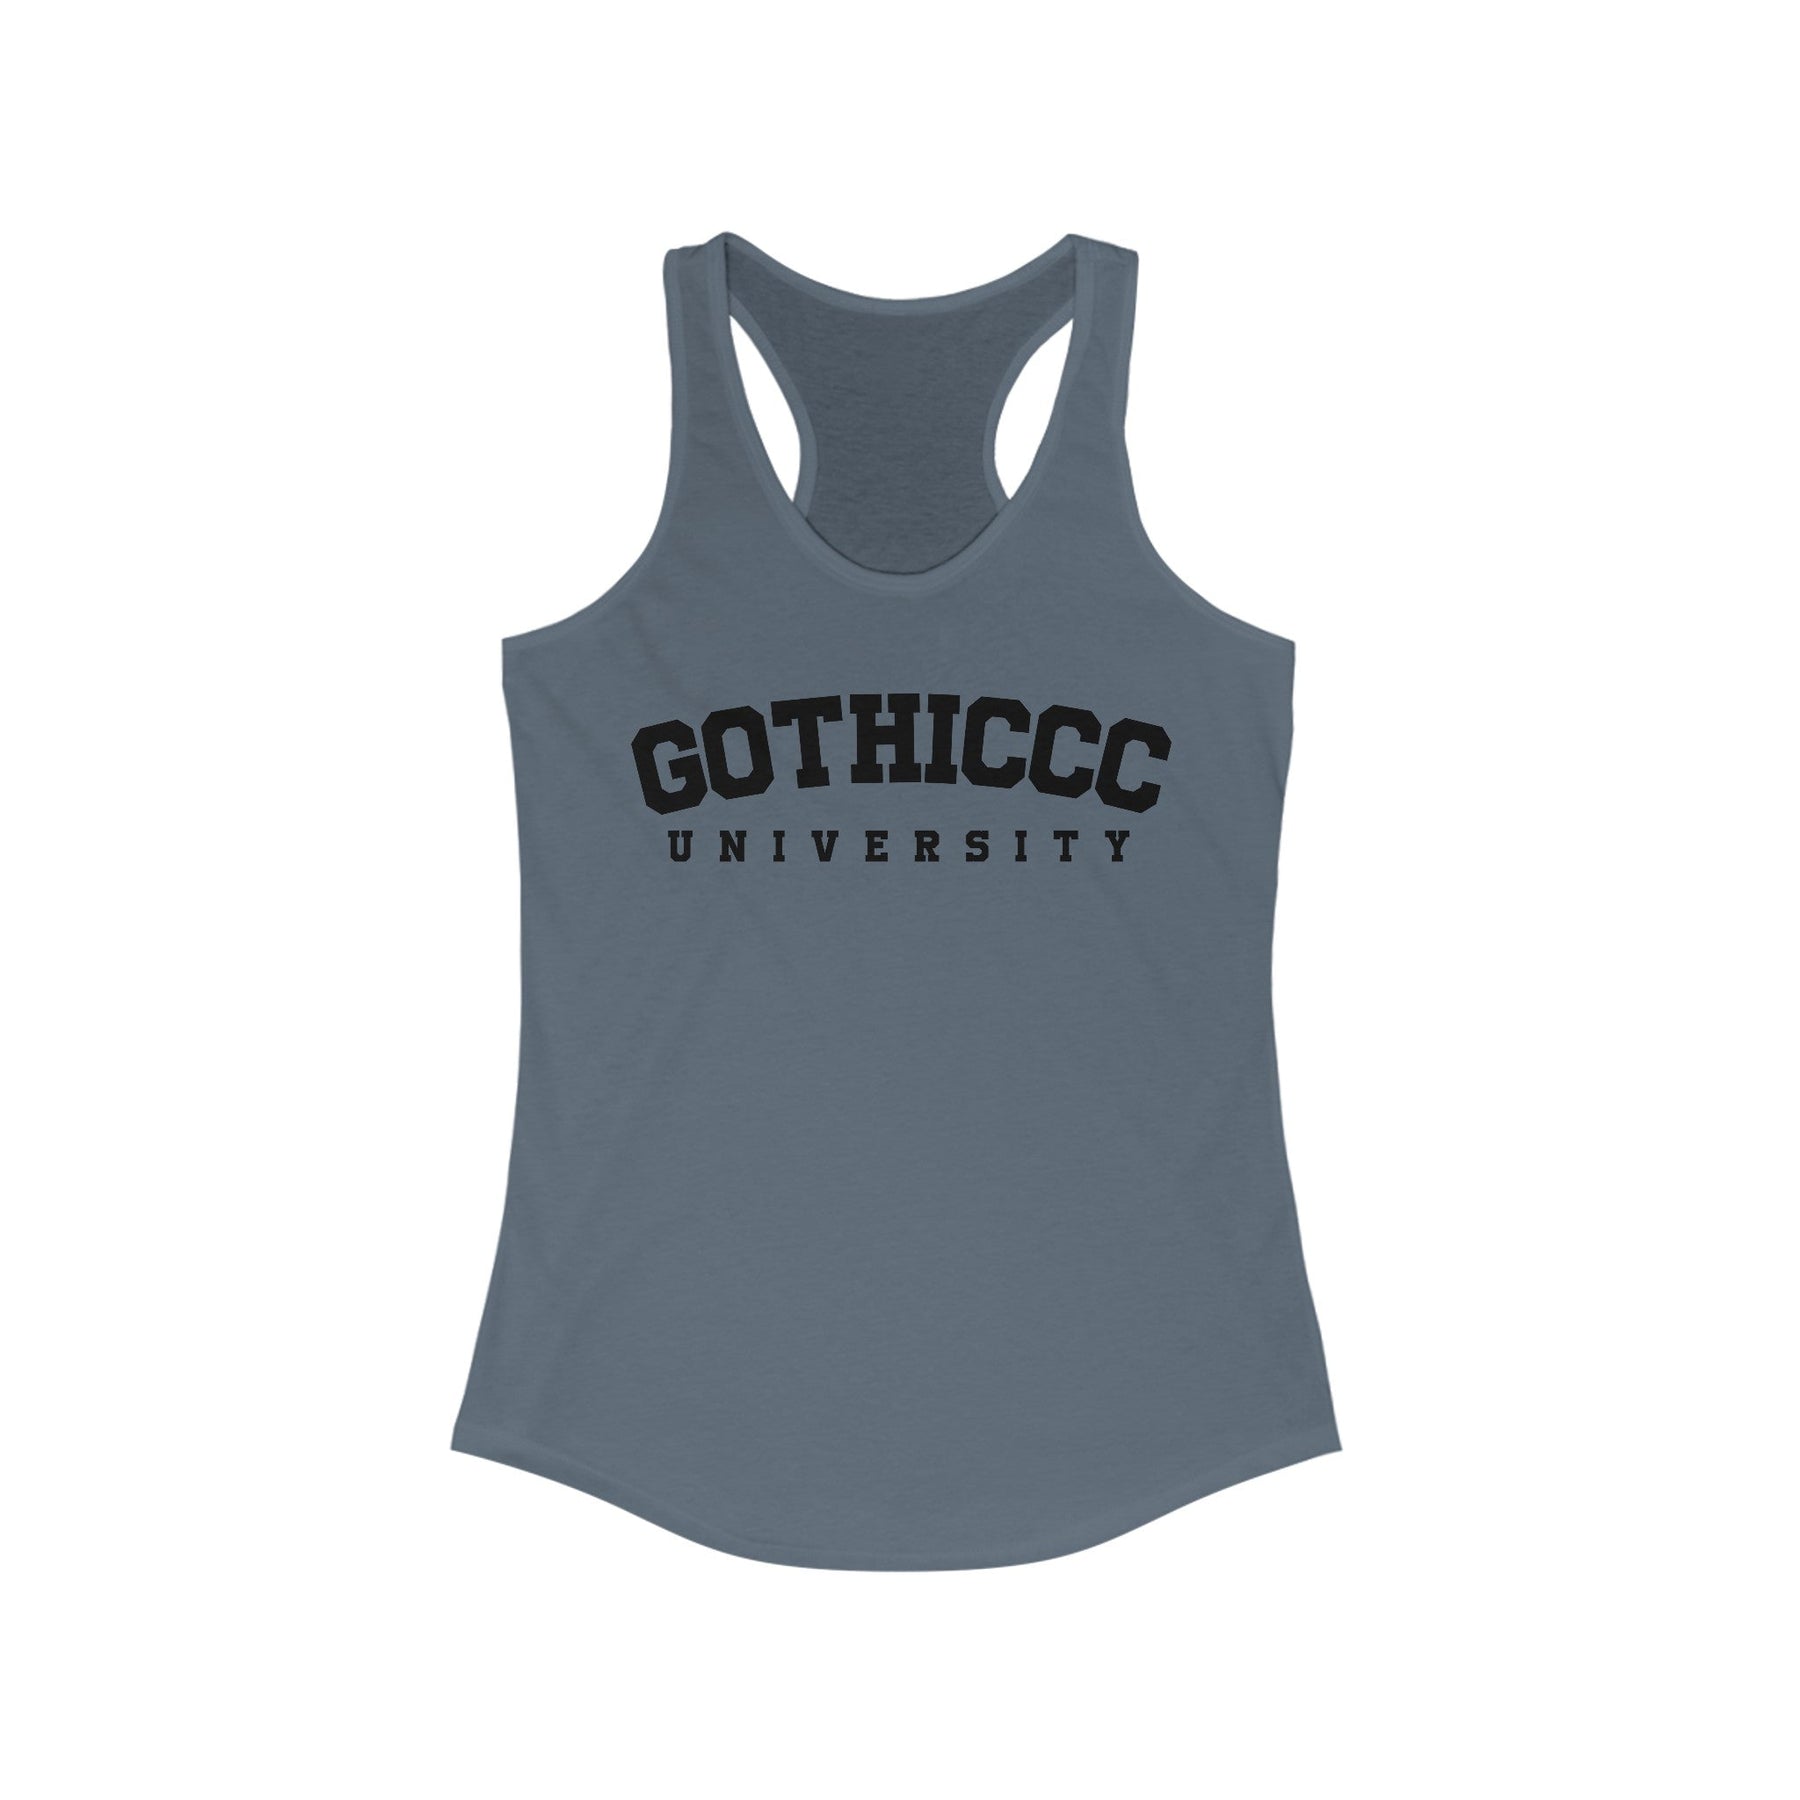 Gothiccc University Women's Racerback Tank - Goth Cloth Co.Tank Top49733150119441453334